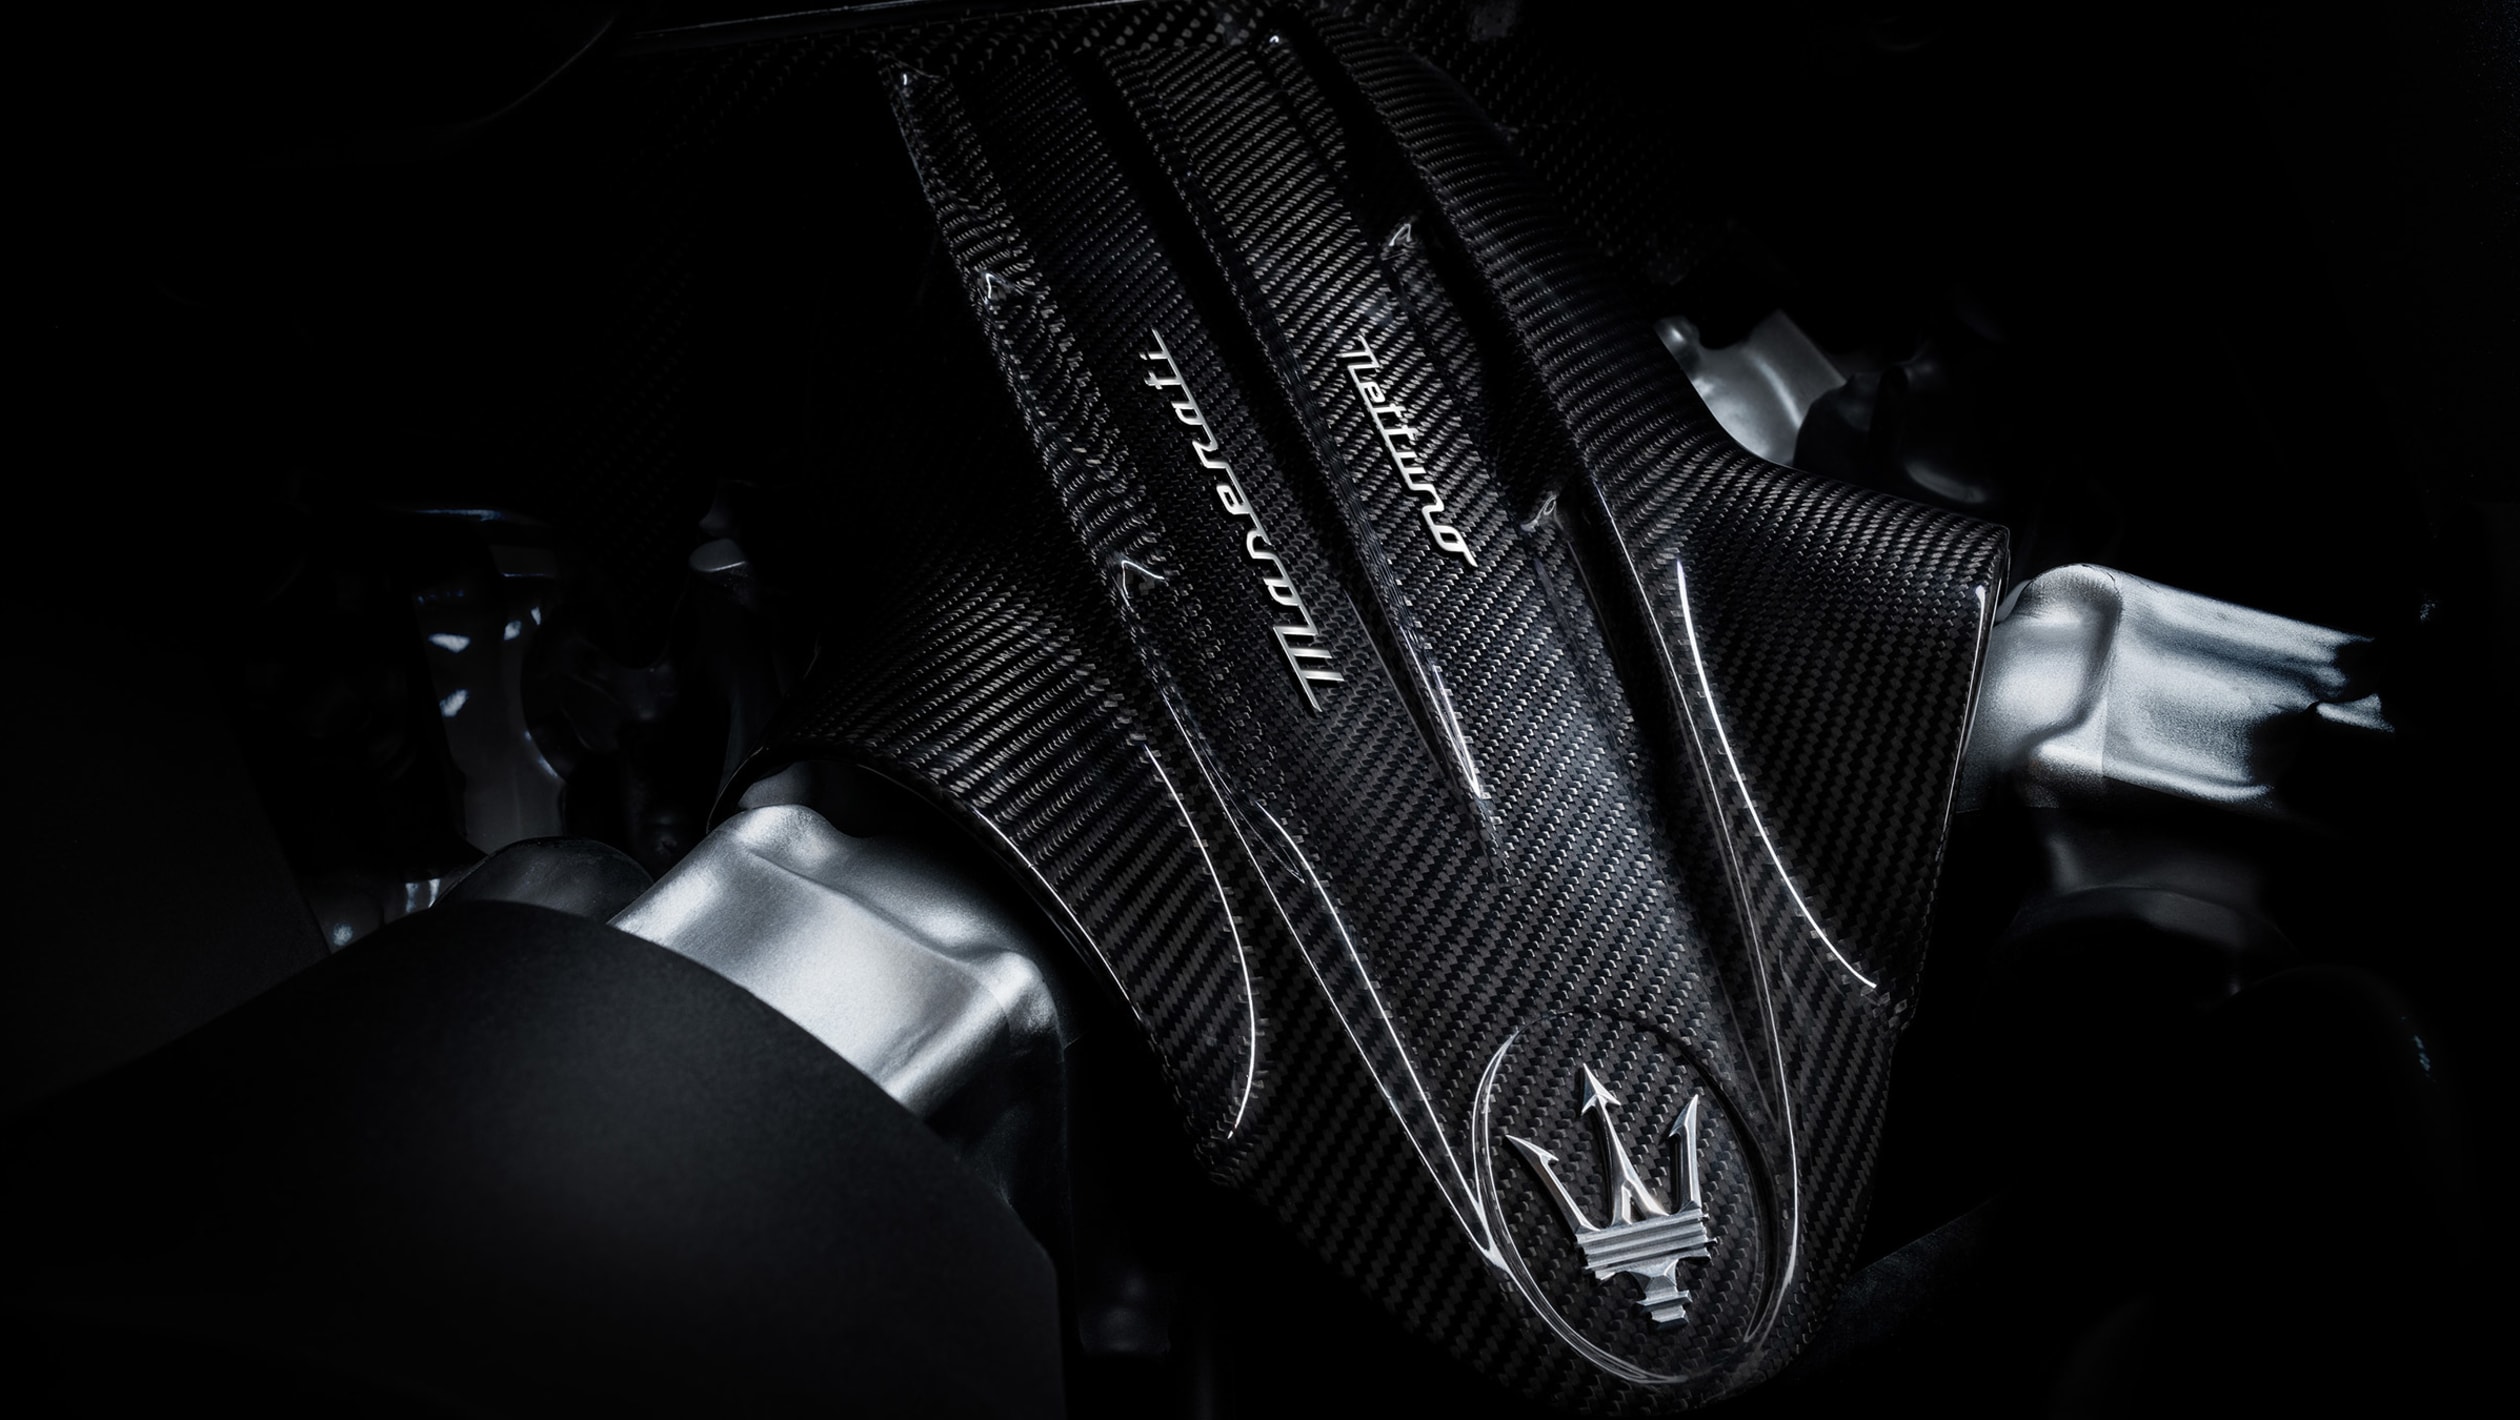 aria-label="New Maserati MC20 supercar 29"